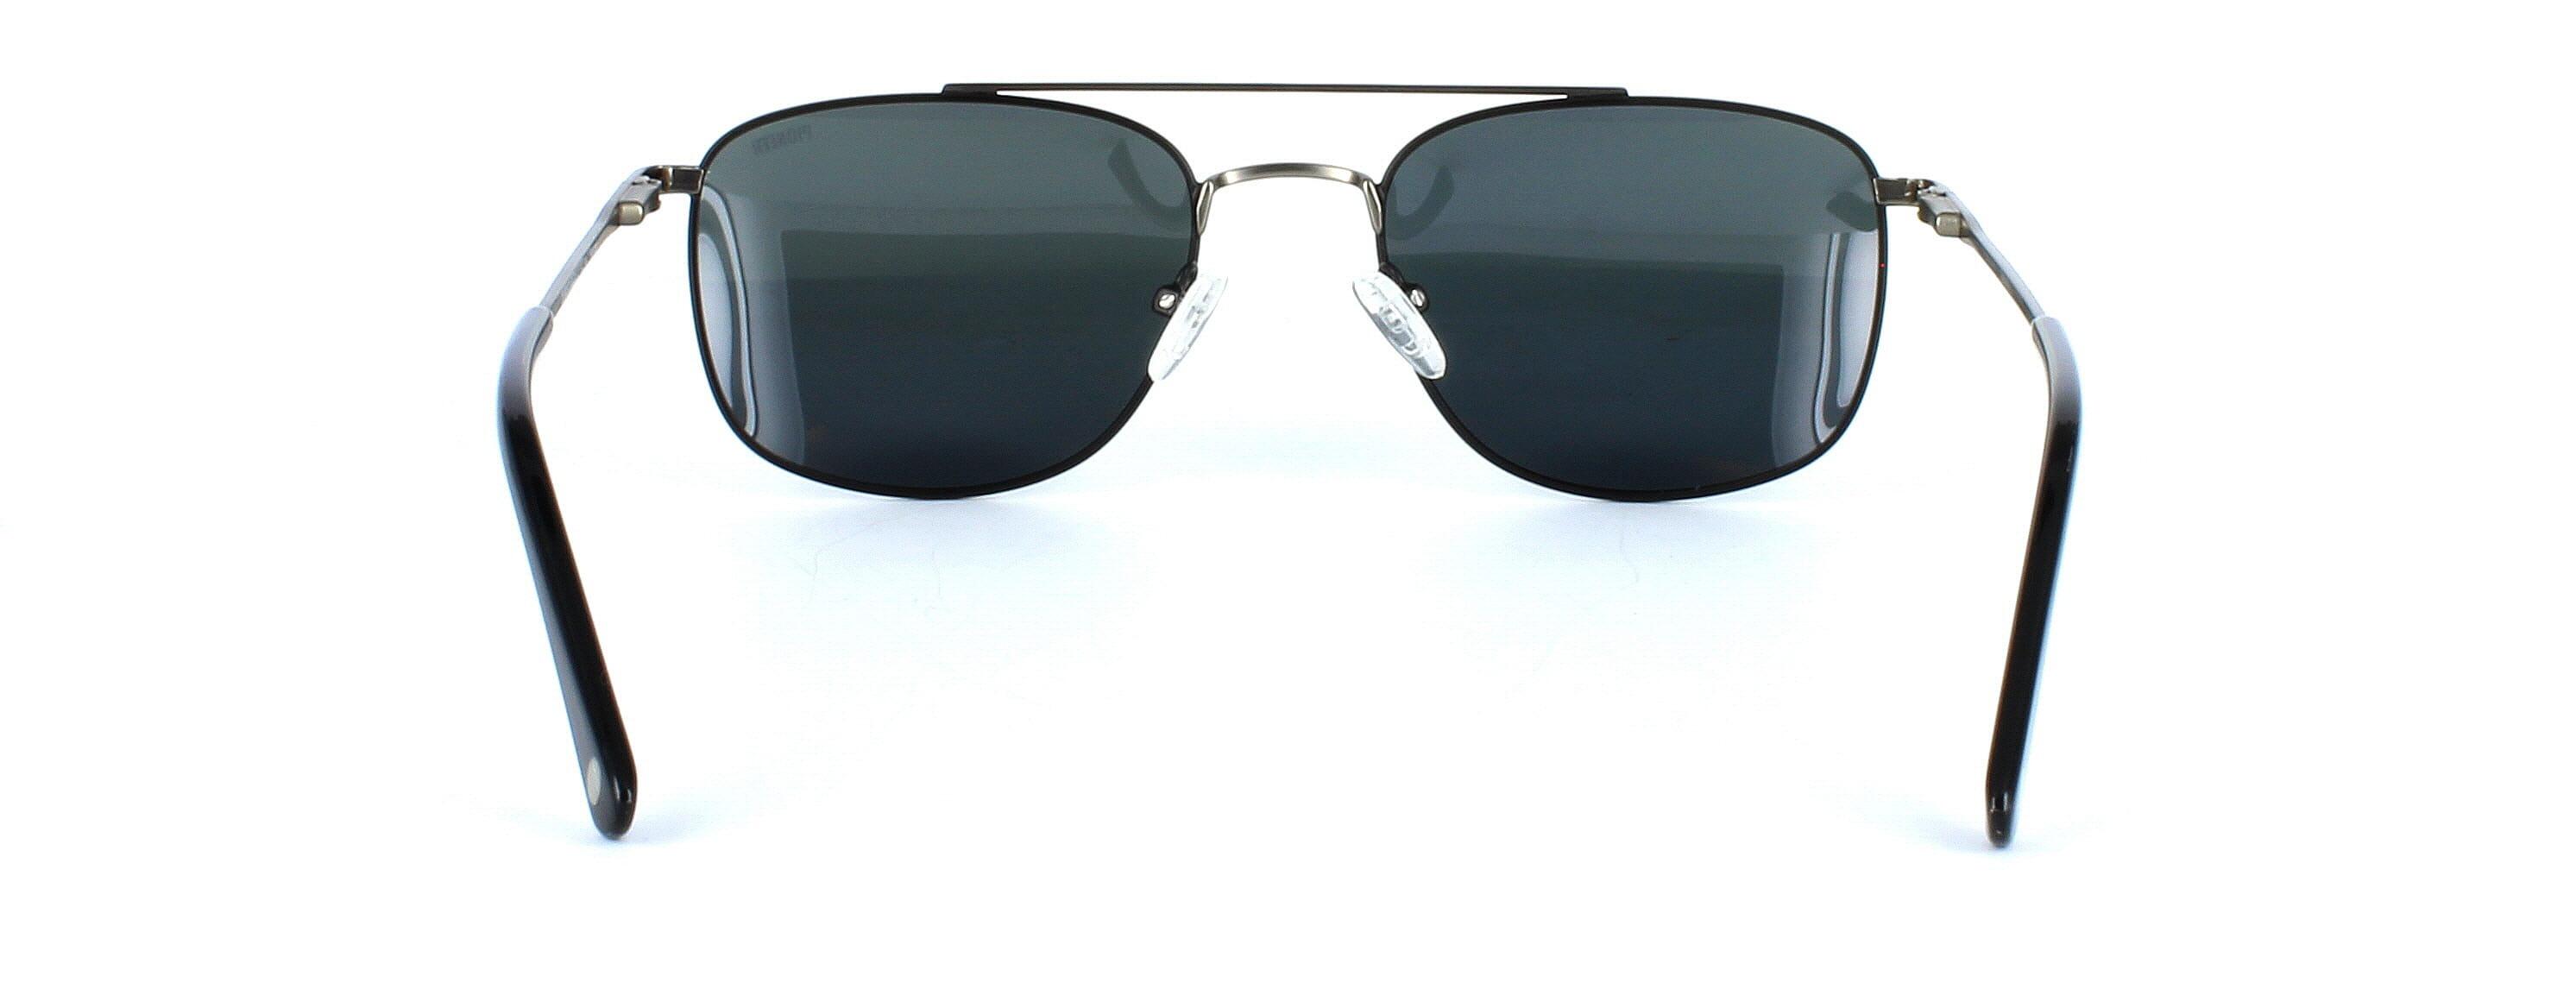 Carlo - Unisex 2-tone aviator style sunglasses here in black and gunmetal - image view 1